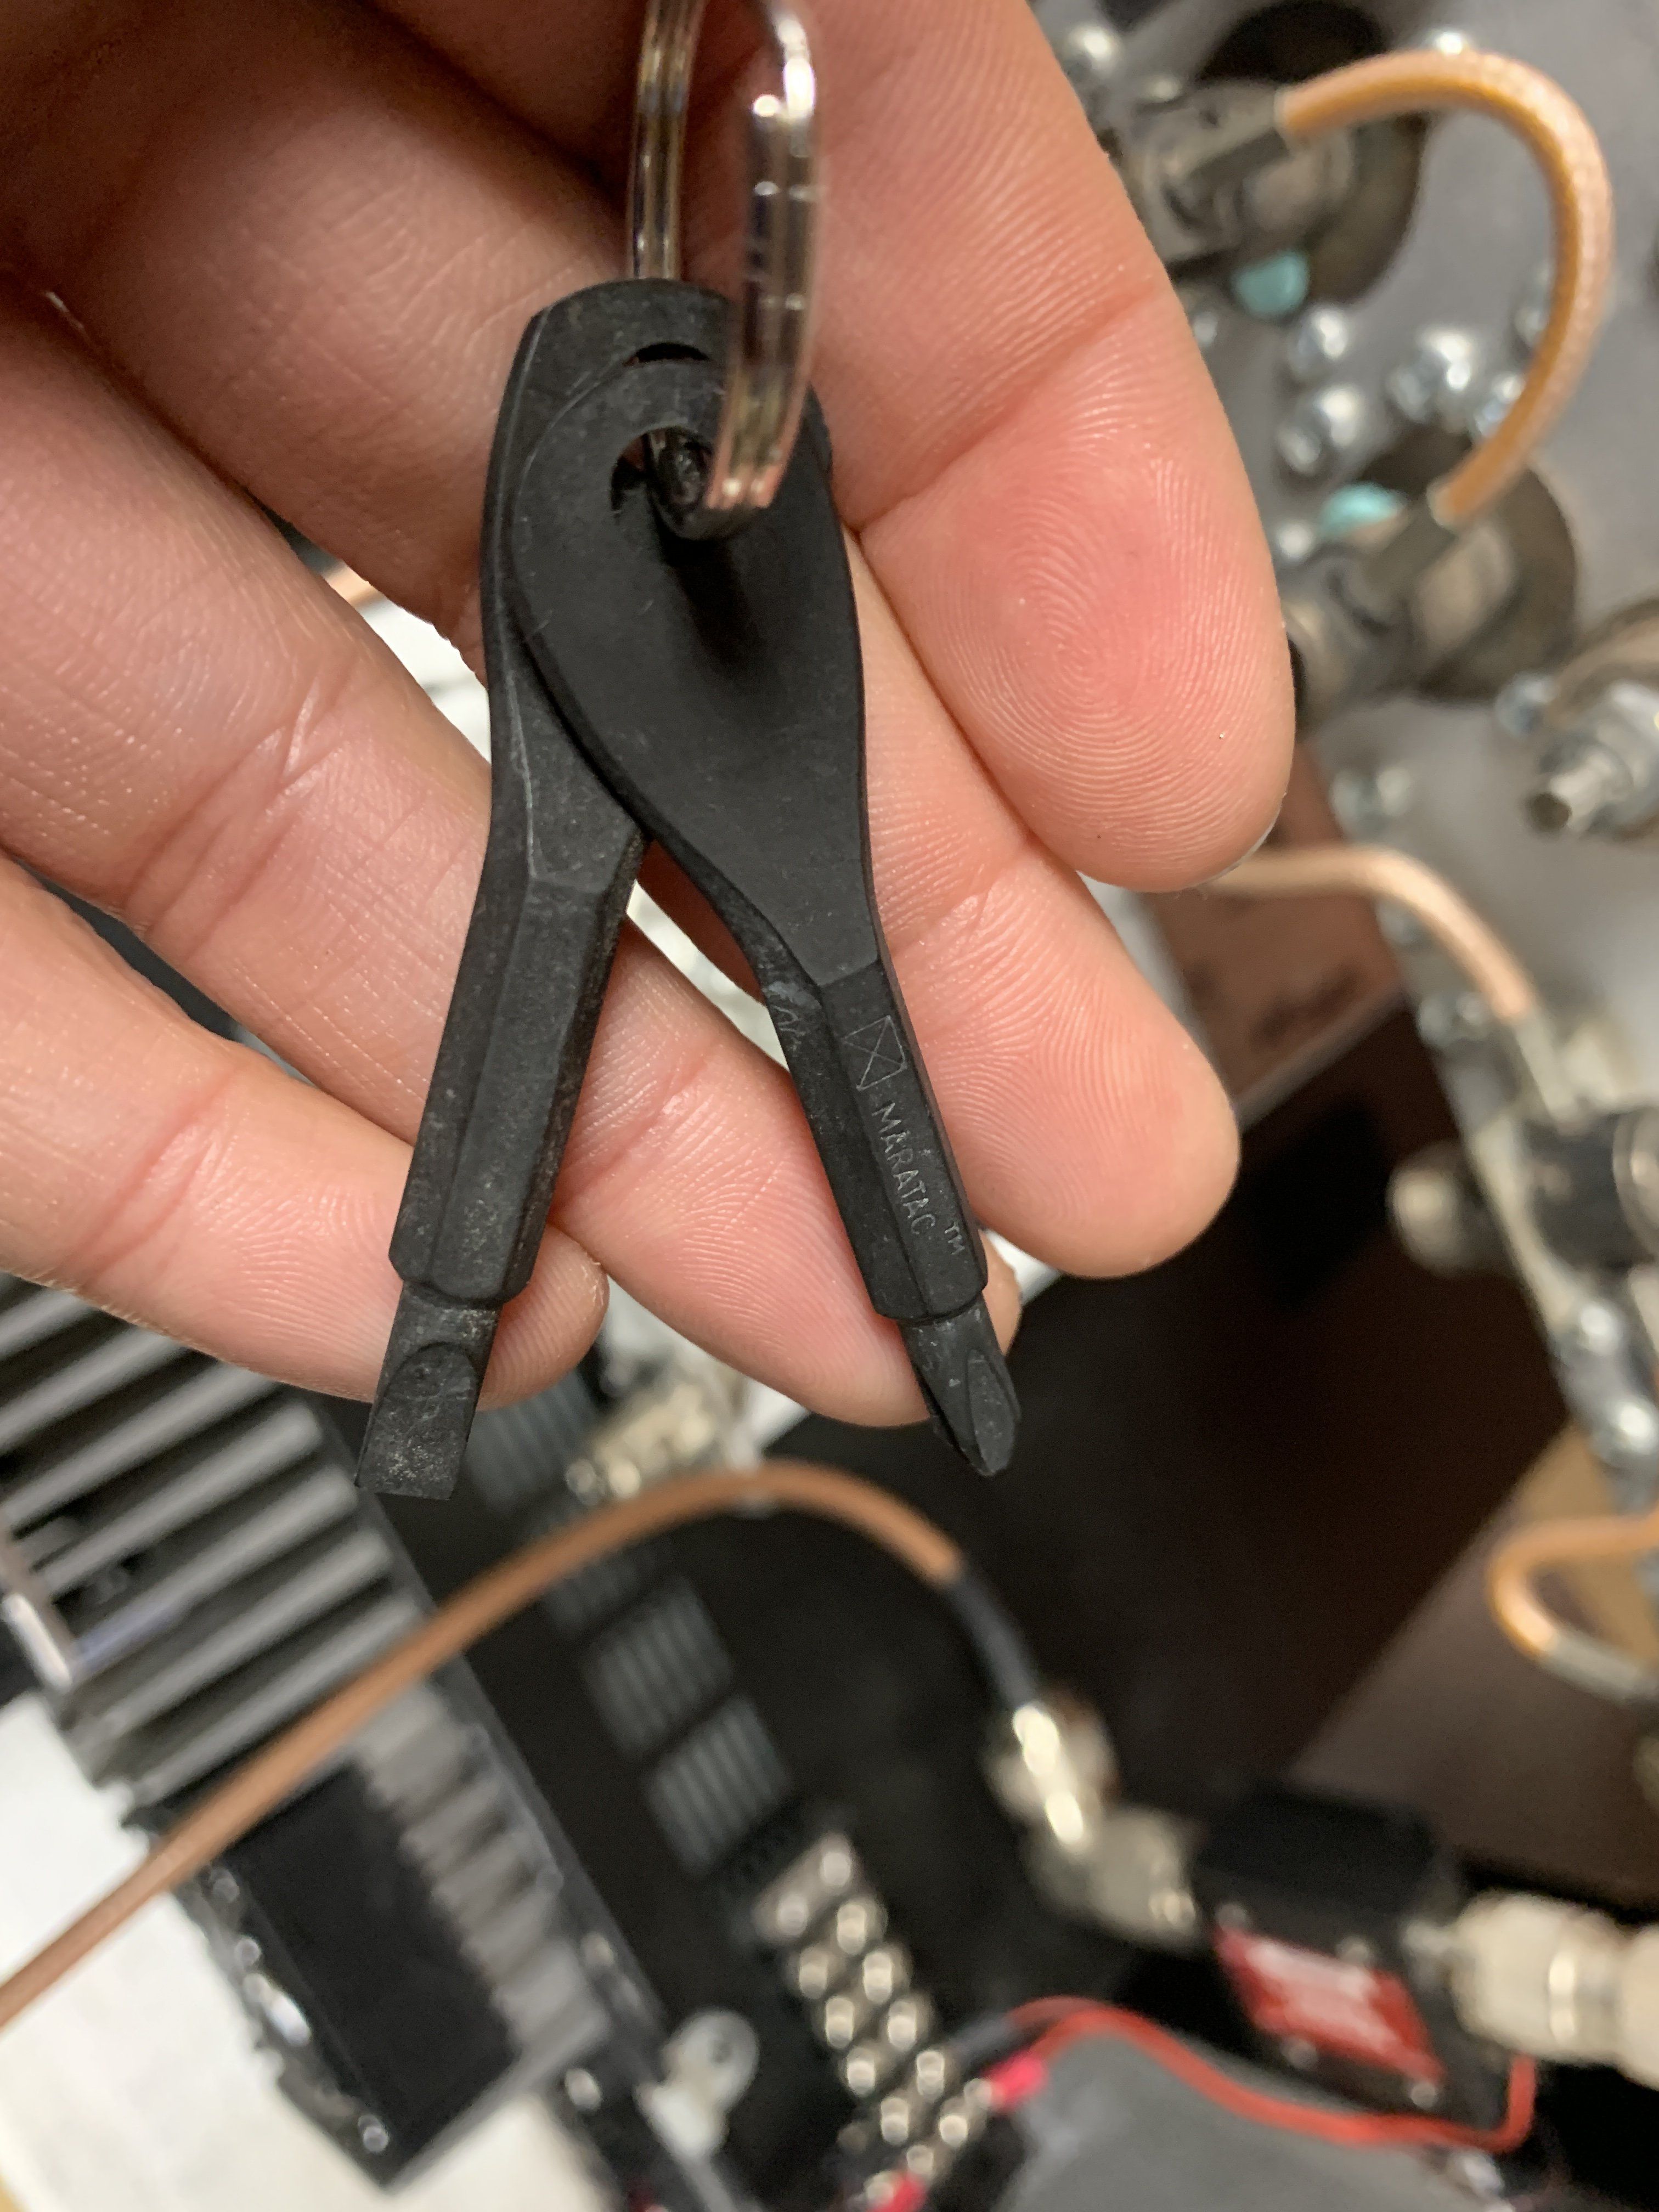 Rustark 450 Pcs Silver Flat Split Key Ring Kit Including 150 Pcs Keychain  Rings with Chain, 150 Pcs Open Jump Rings Bulk and 150 Pcs Screws Eye Pin  in